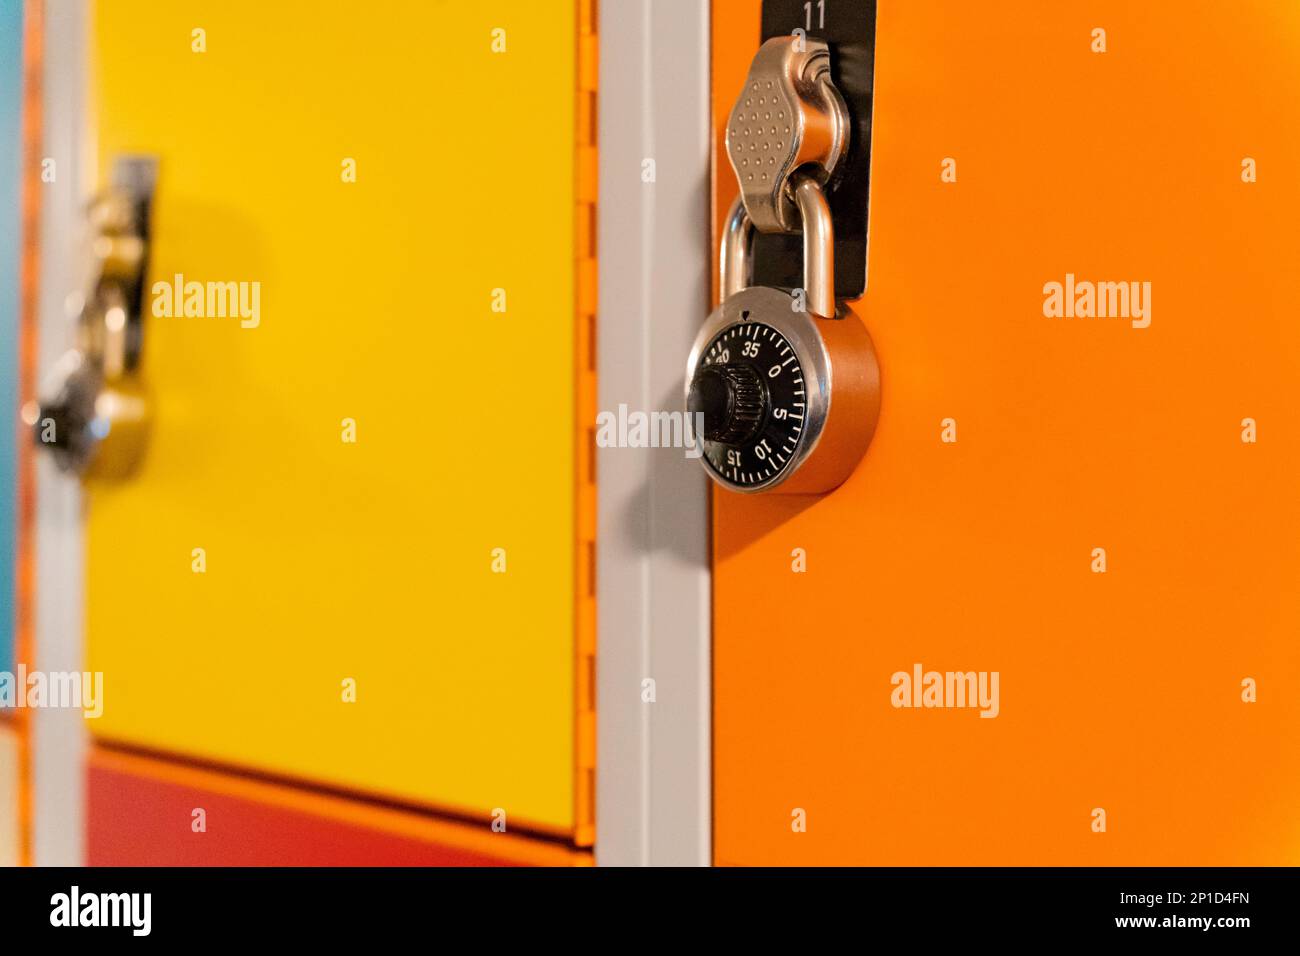 Combination locks on colorful school lockers Stock Photo